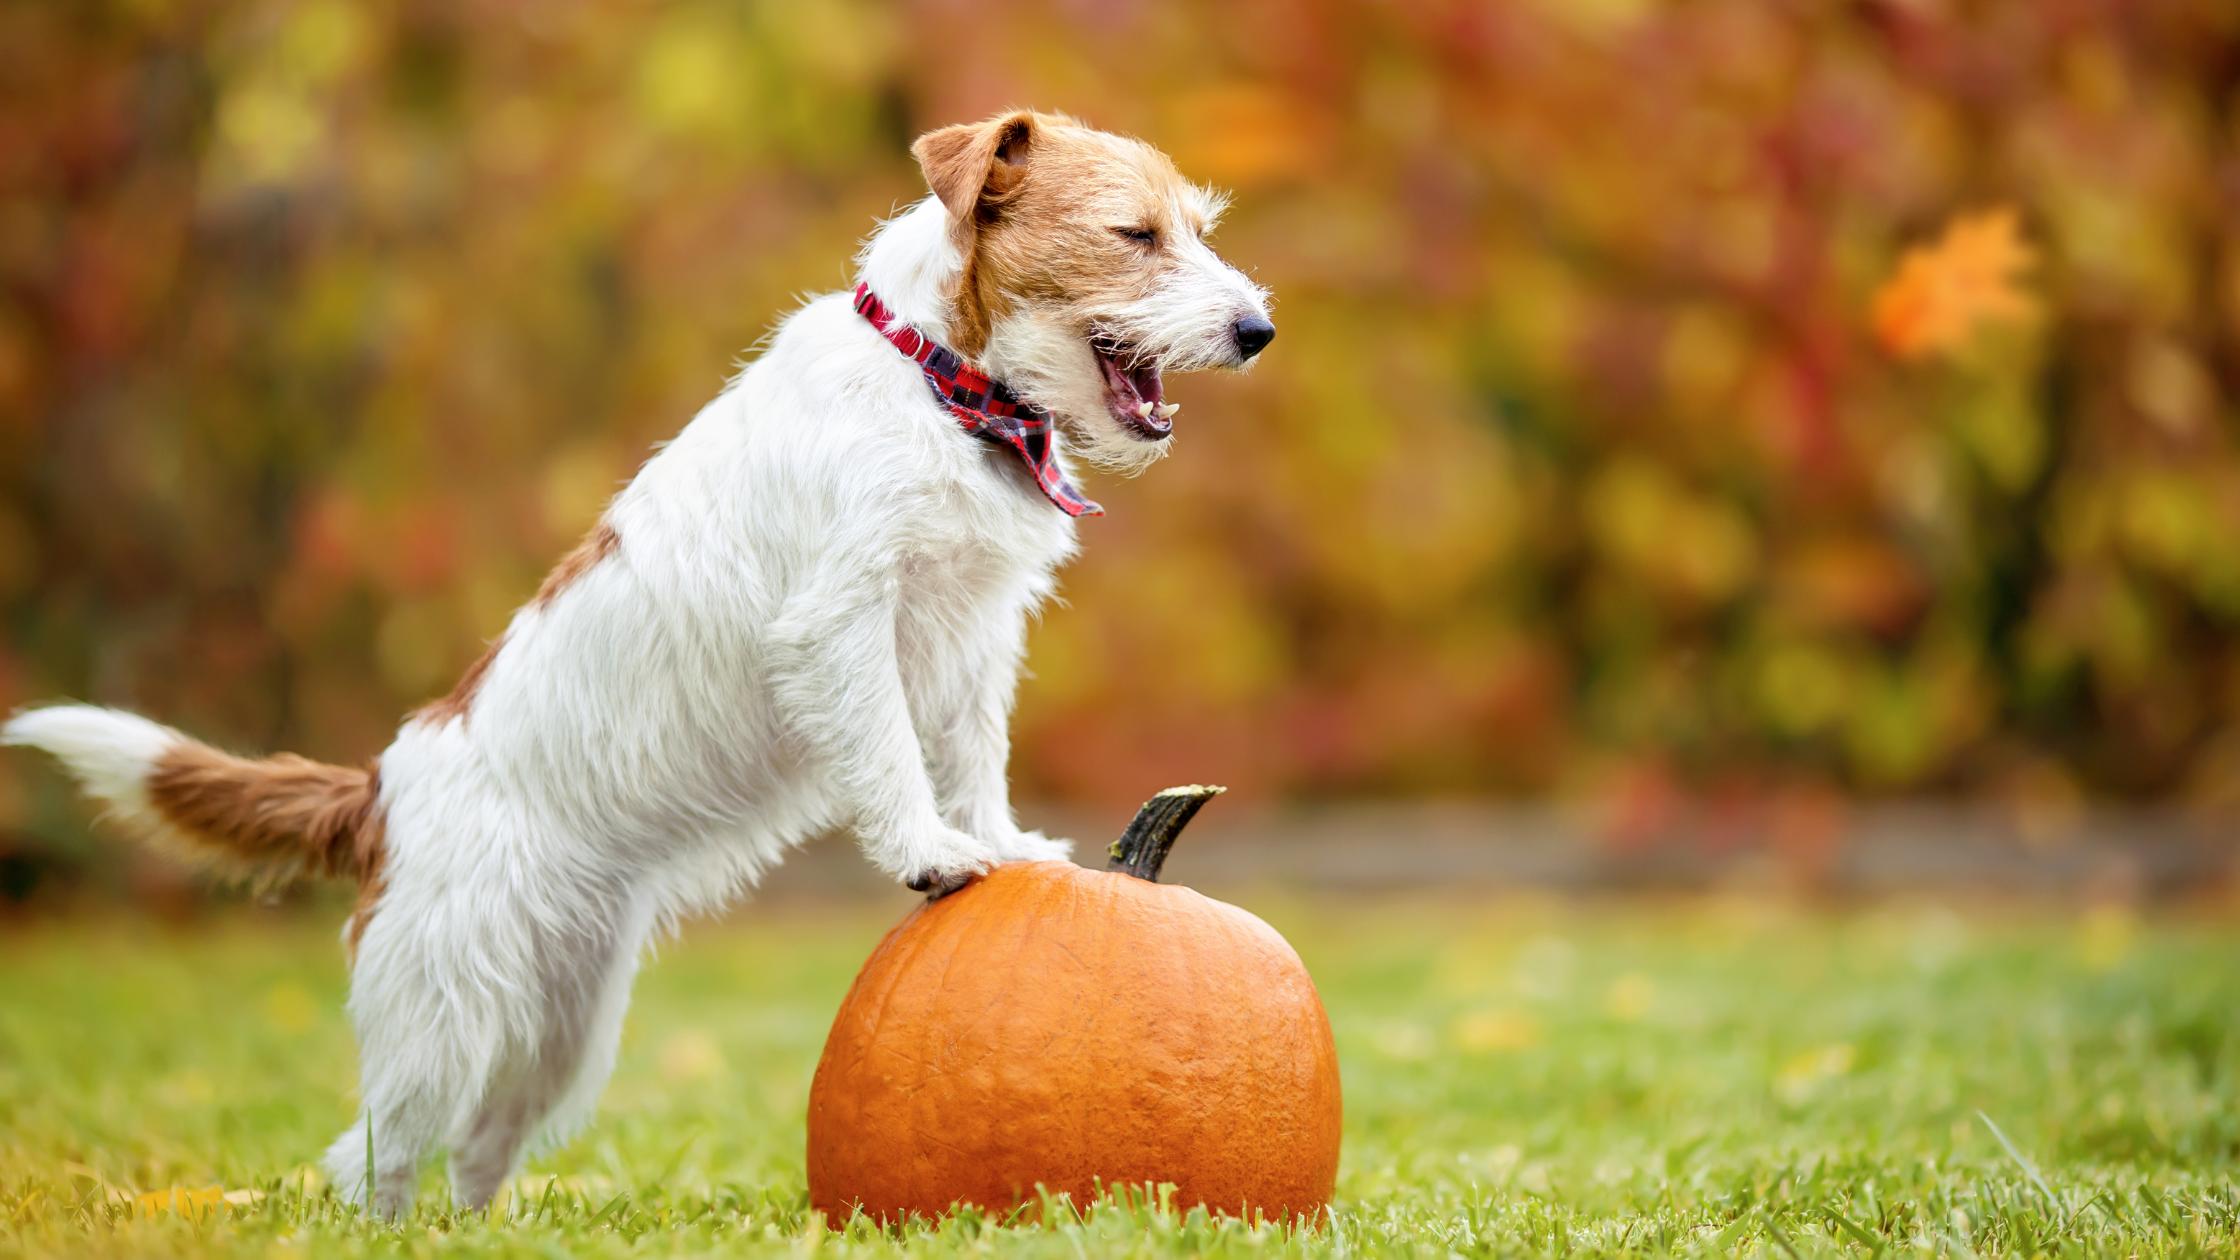 Thanksgiving-Themed Pet Photoshoot Ideas